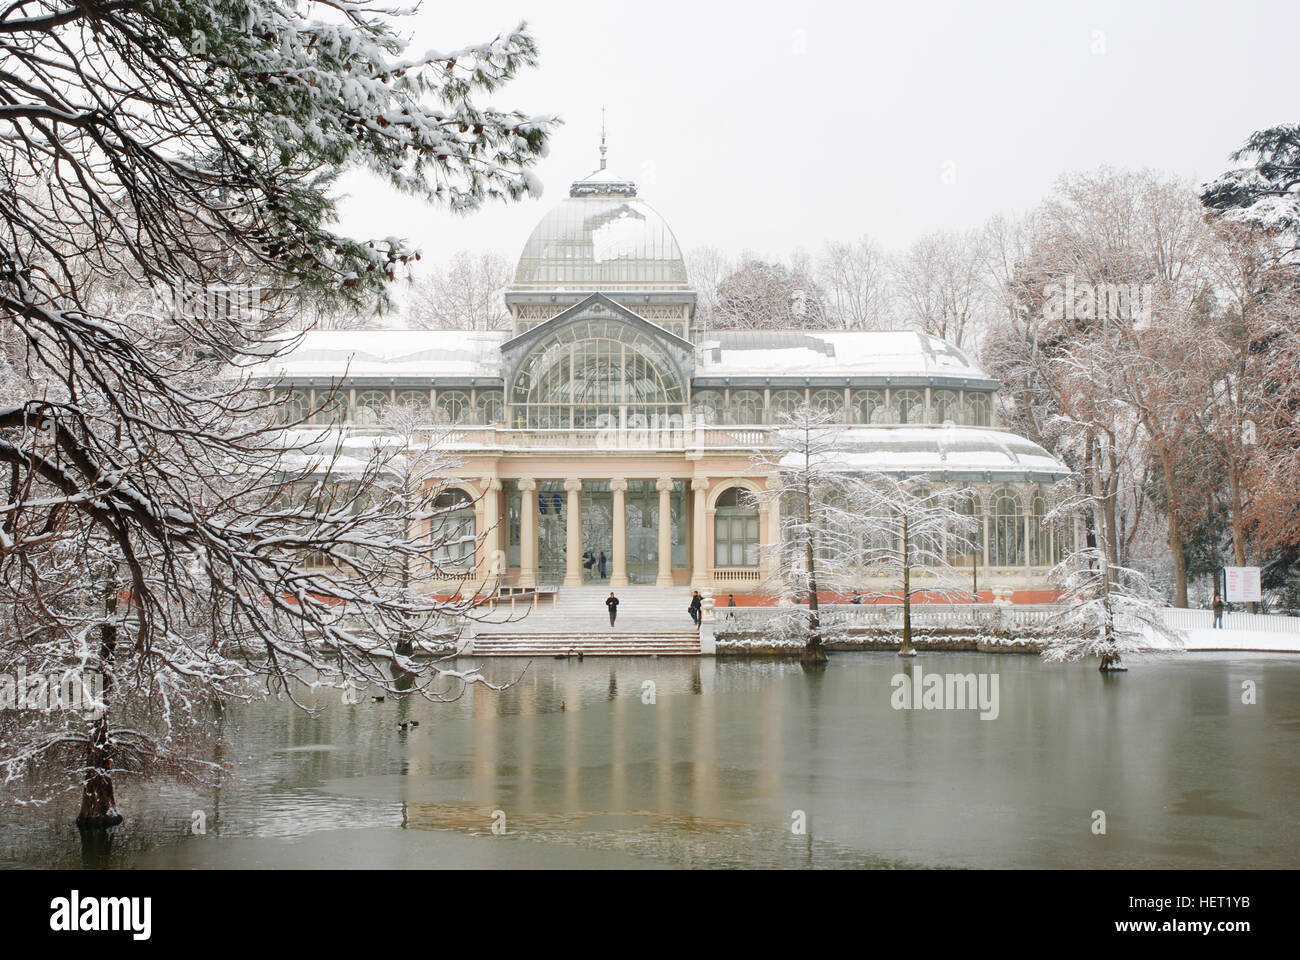 Snow covered Cristal Palace. The Retiro park, Madrid, Spain. Stock Photo